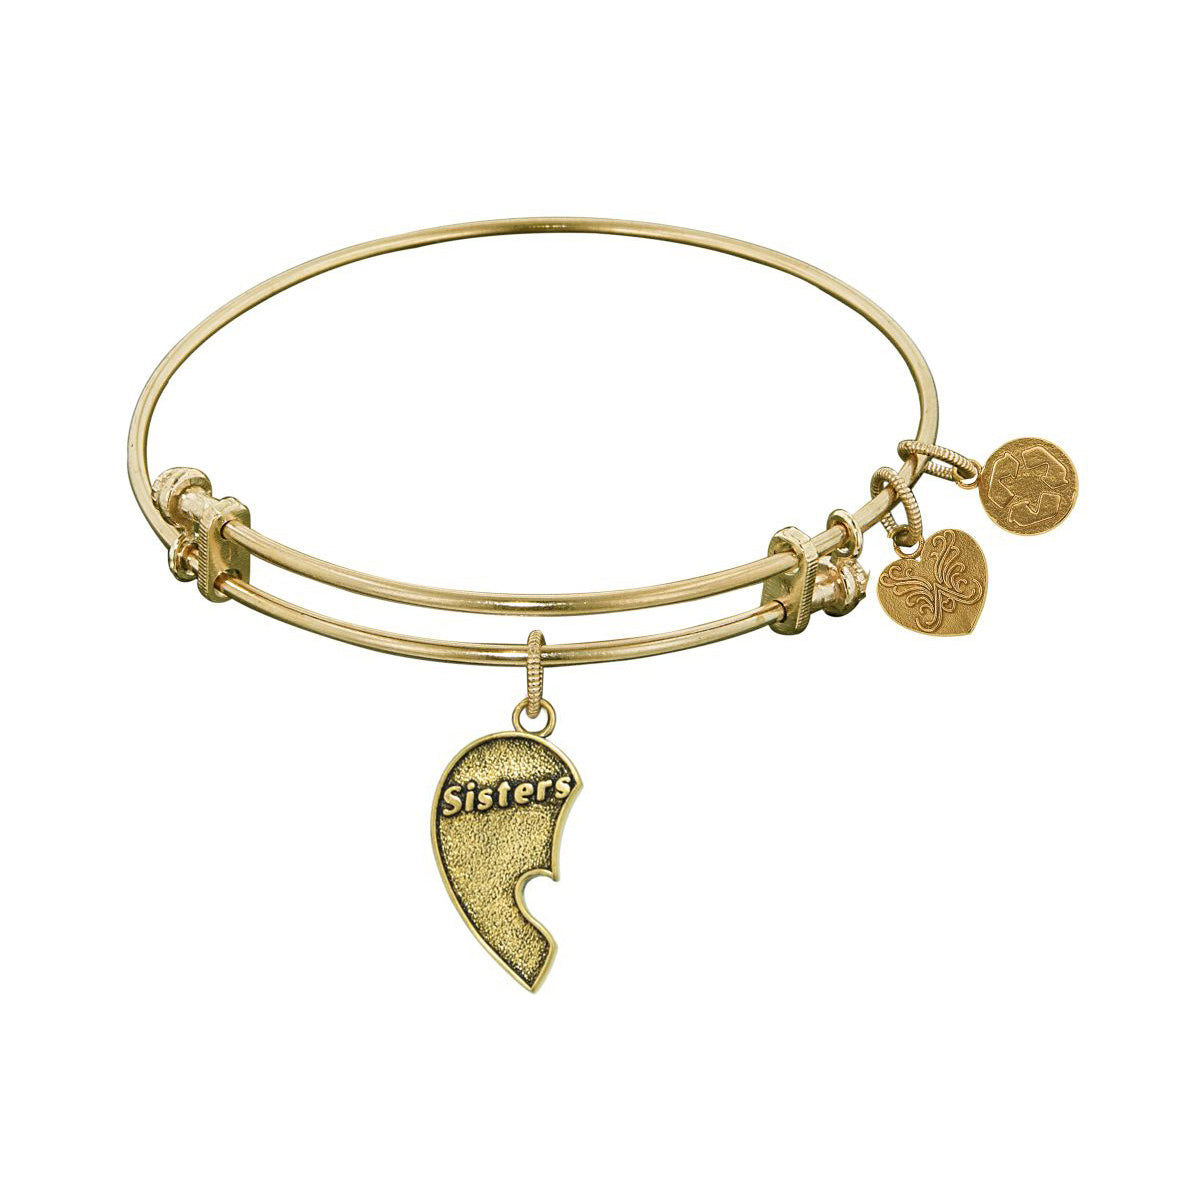 Stipple Finish Brass Left-Half Heart Sisters Angelica Bangle Bracelet, 7.25" fine designer jewelry for men and women